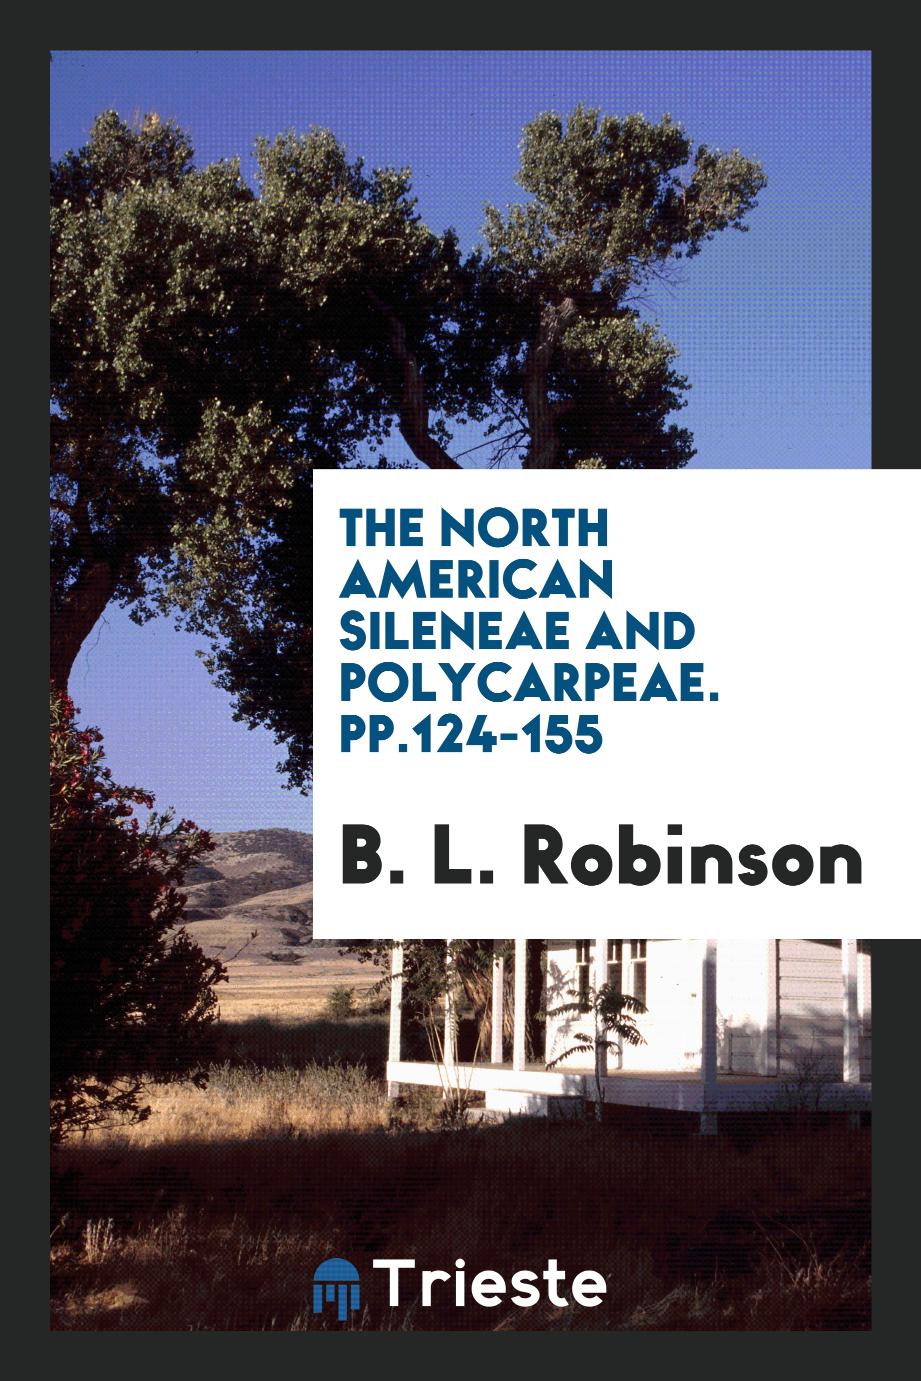 The North American Sileneae and Polycarpeae. pp.124-155